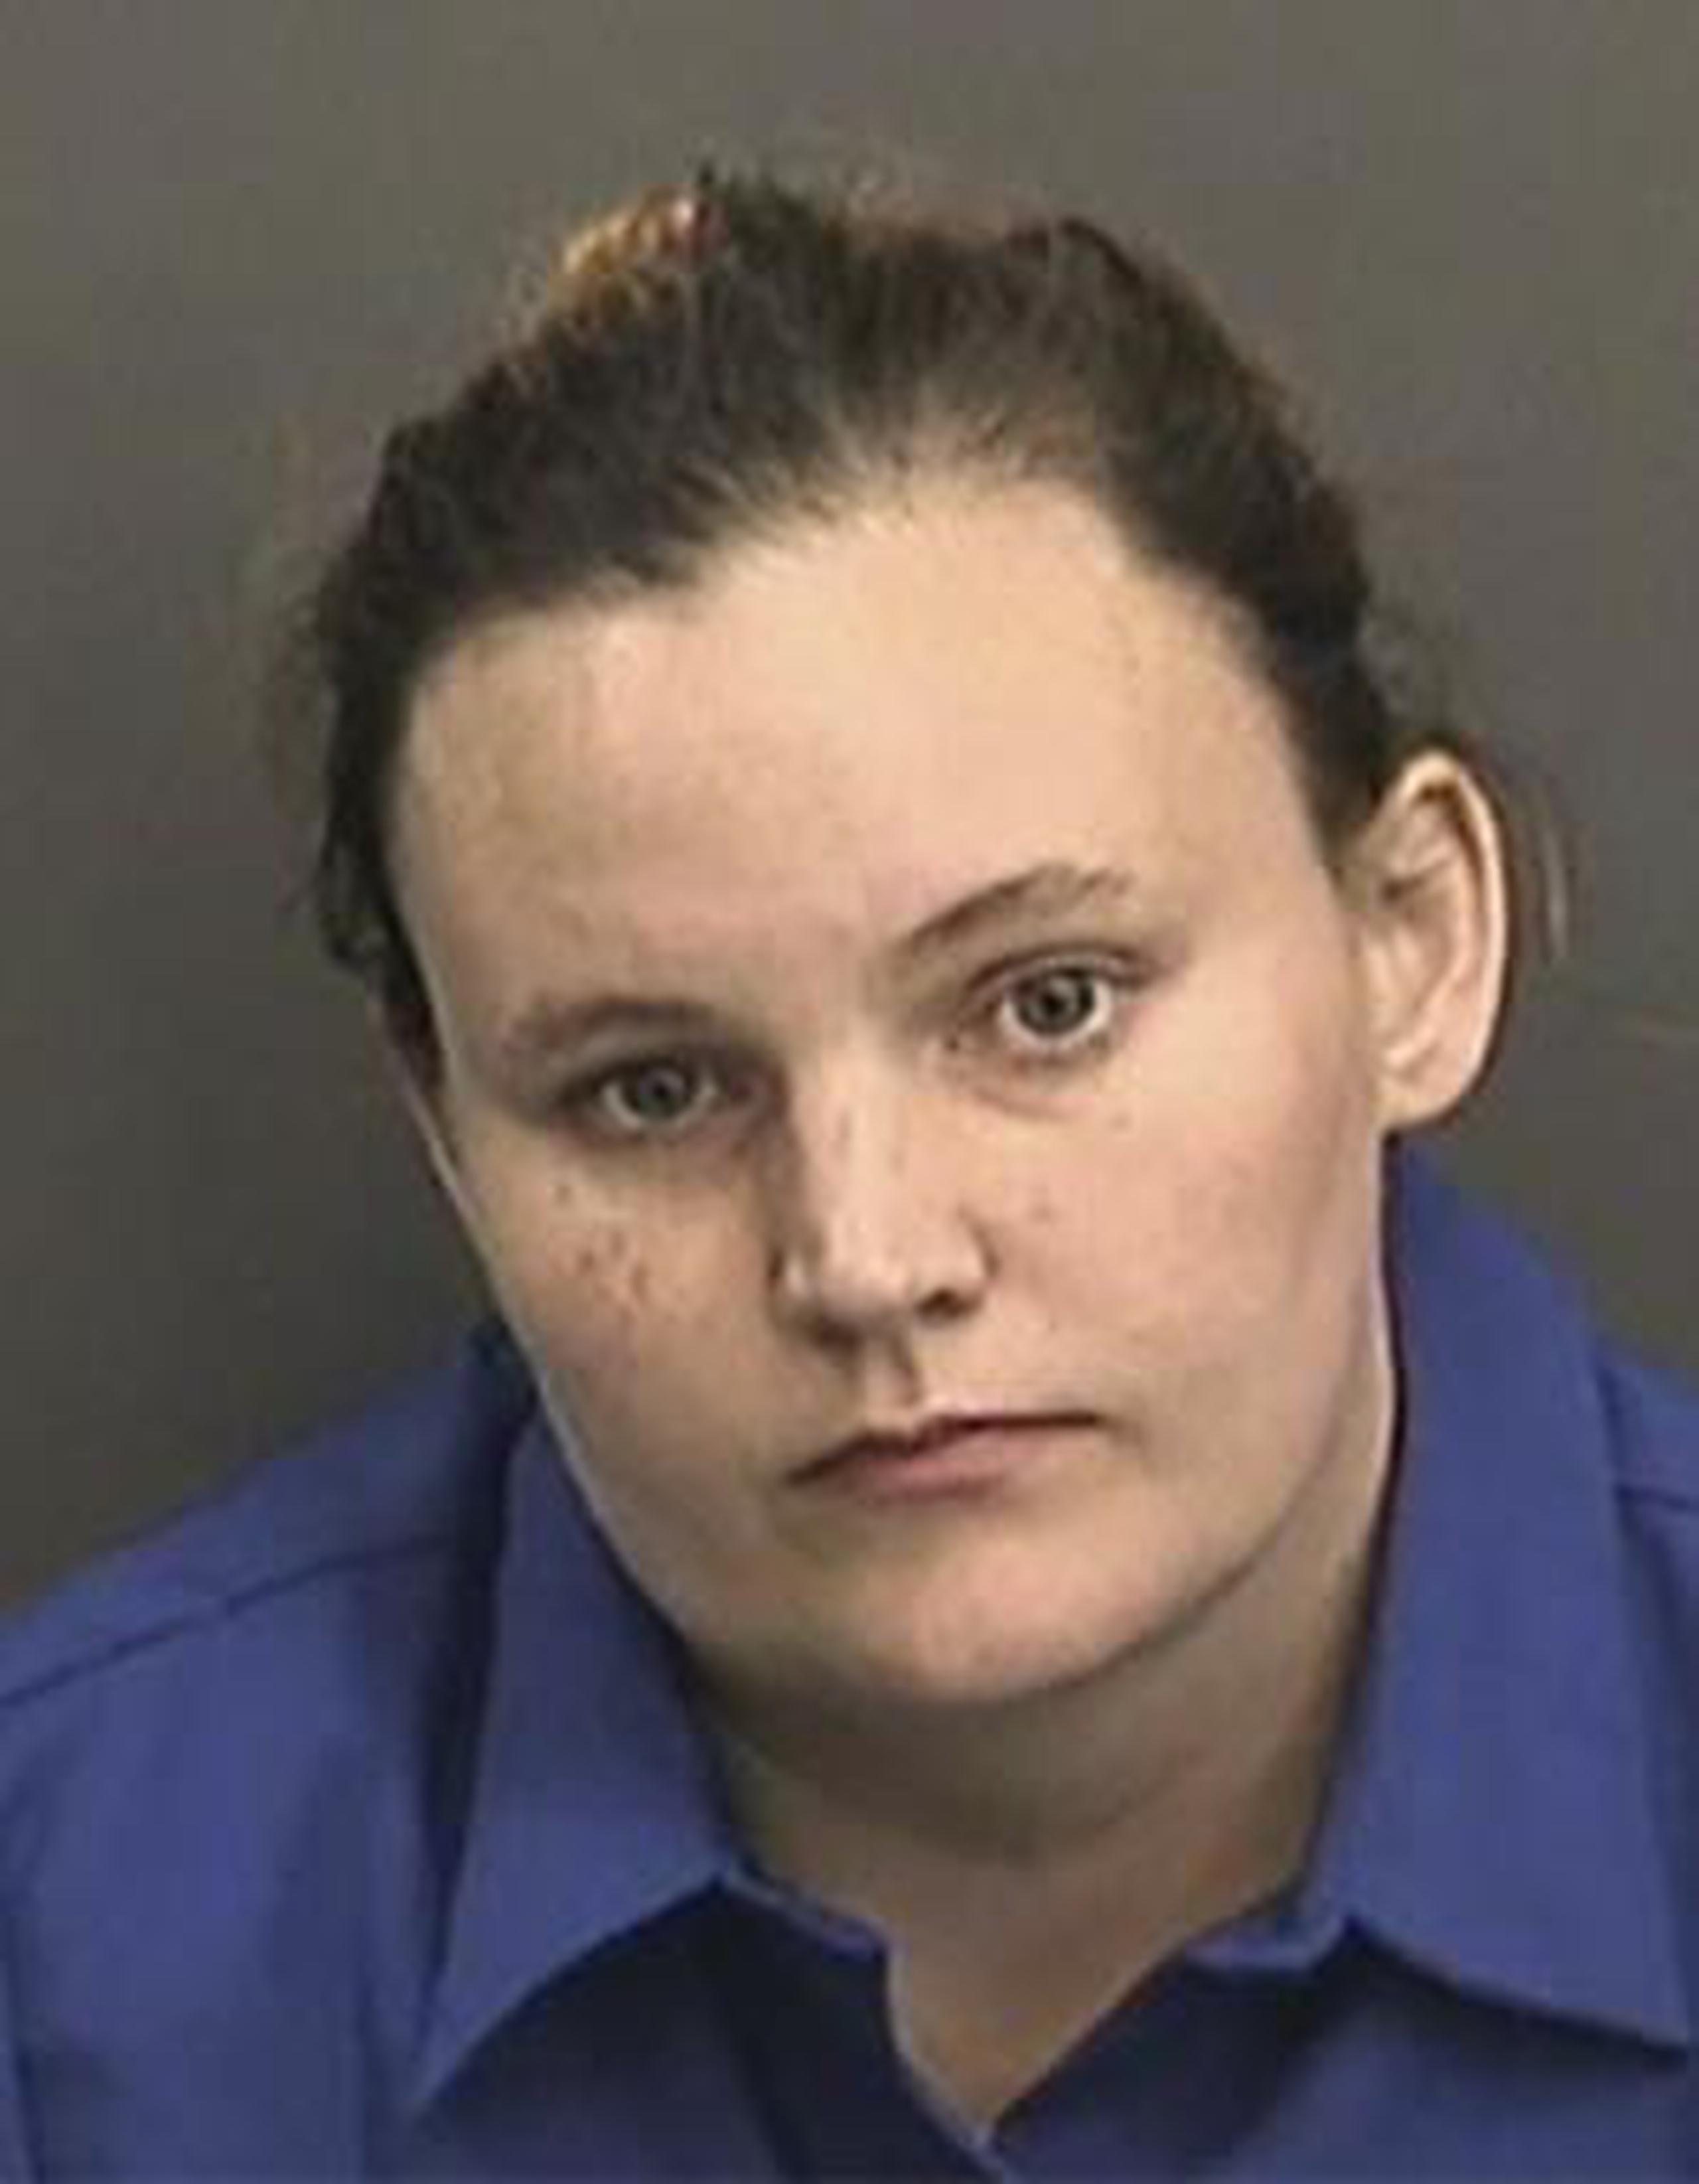 Marissa Mowry fue declarada depredadora sexual. (Hillsborough County Sheriff's Office vía AP)